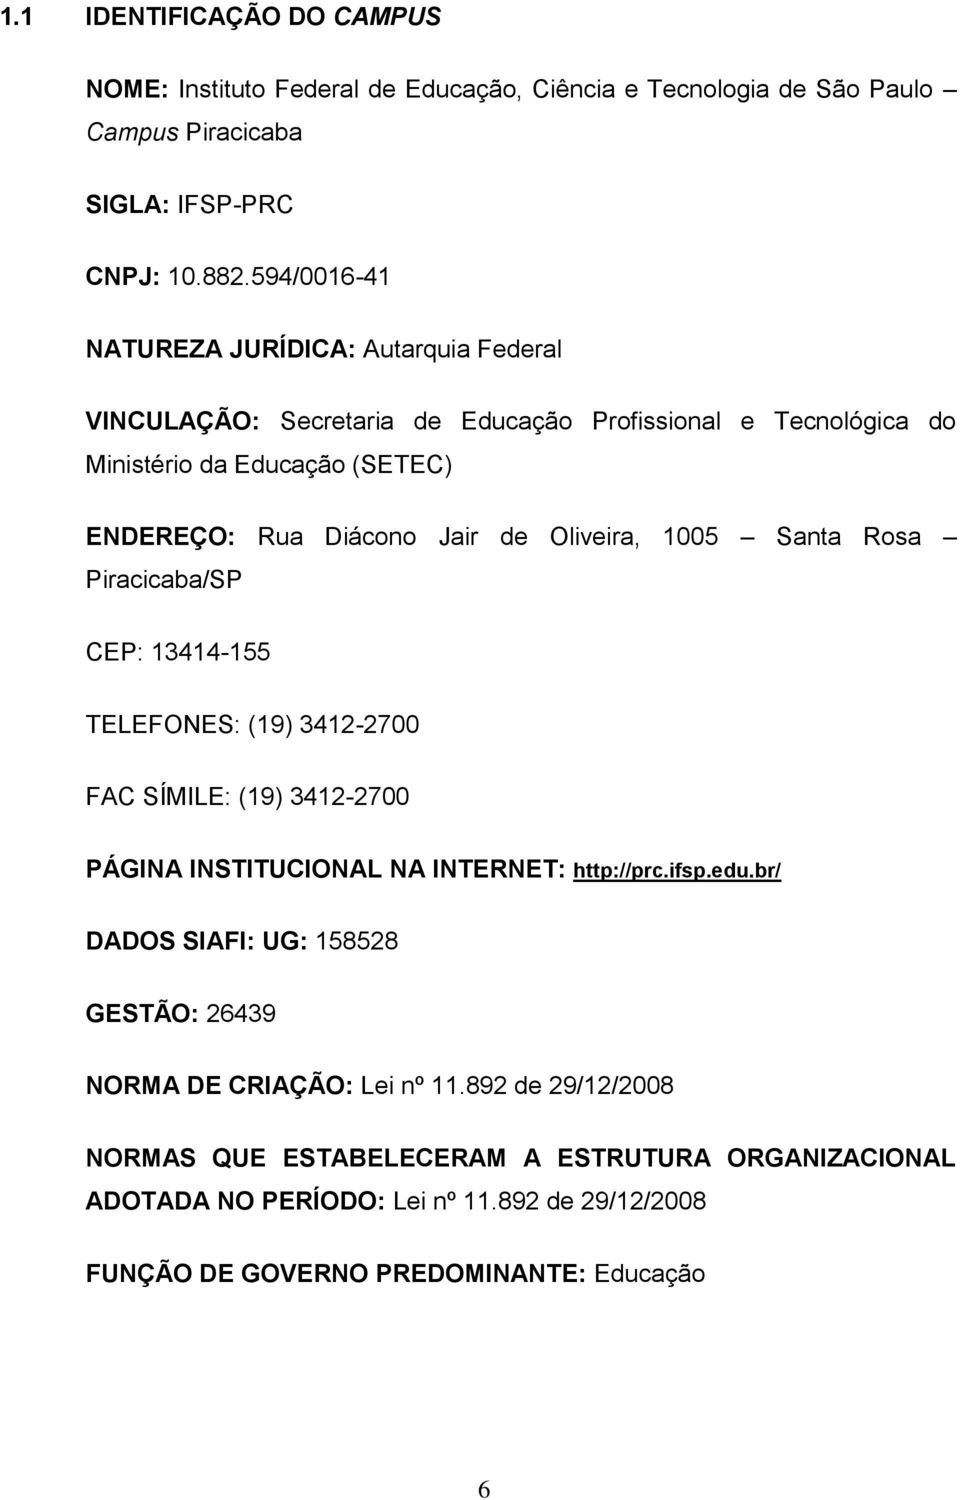 Oliveira, 1005 Santa Rosa Piracicaba/SP CEP: 13414-155 TELEFONES: (19) 3412-2700 FAC SÍMILE: (19) 3412-2700 PÁGINA INSTITUCIONAL NA INTERNET: http://prc.ifsp.edu.